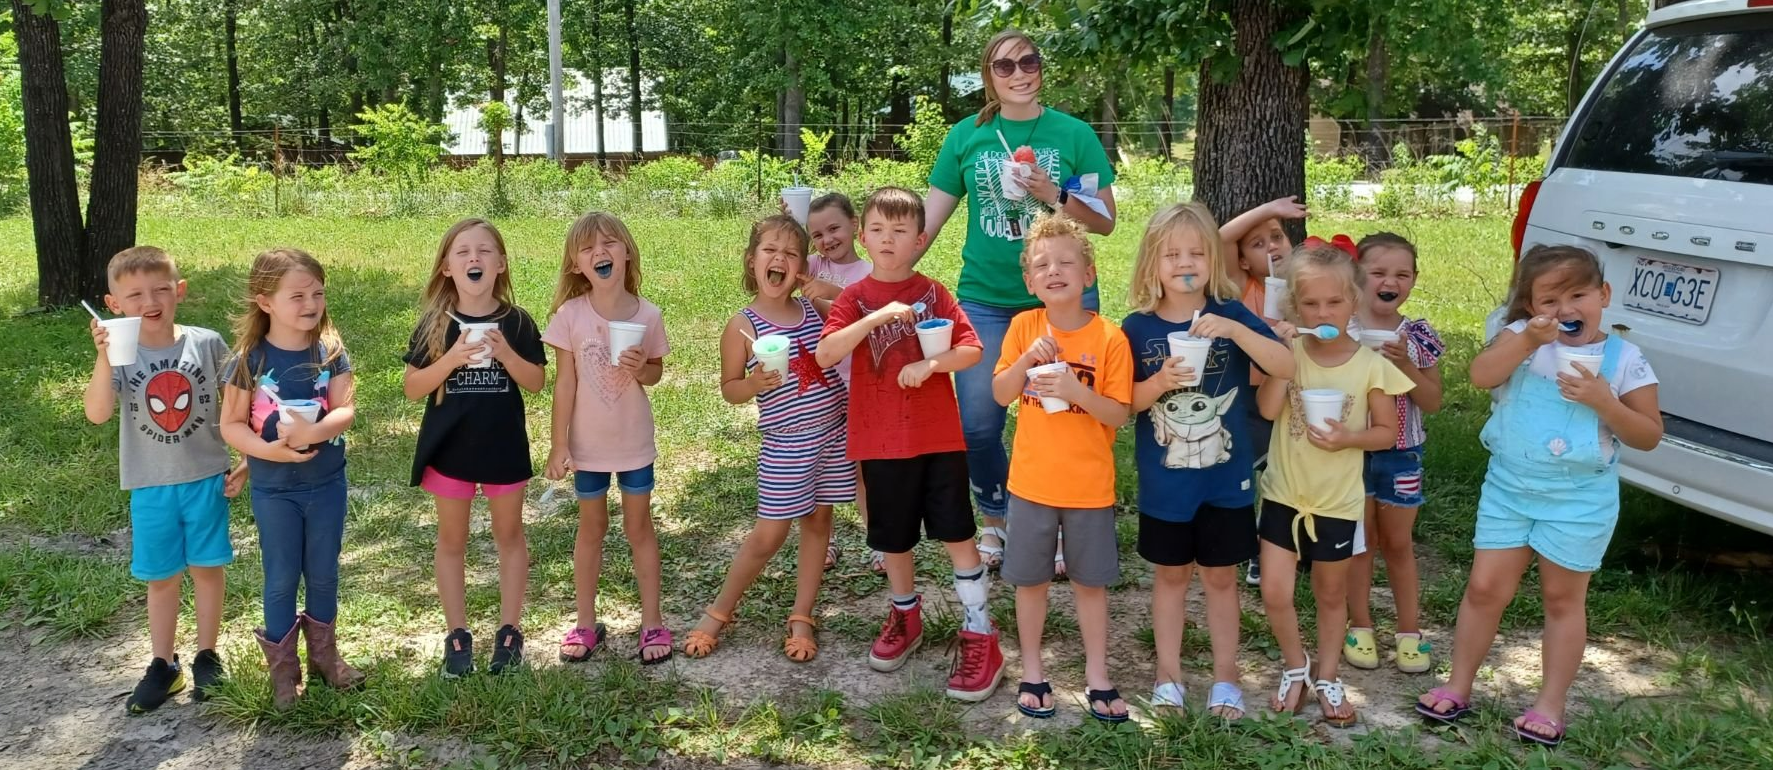 Summer school kiddos eating shaved ice